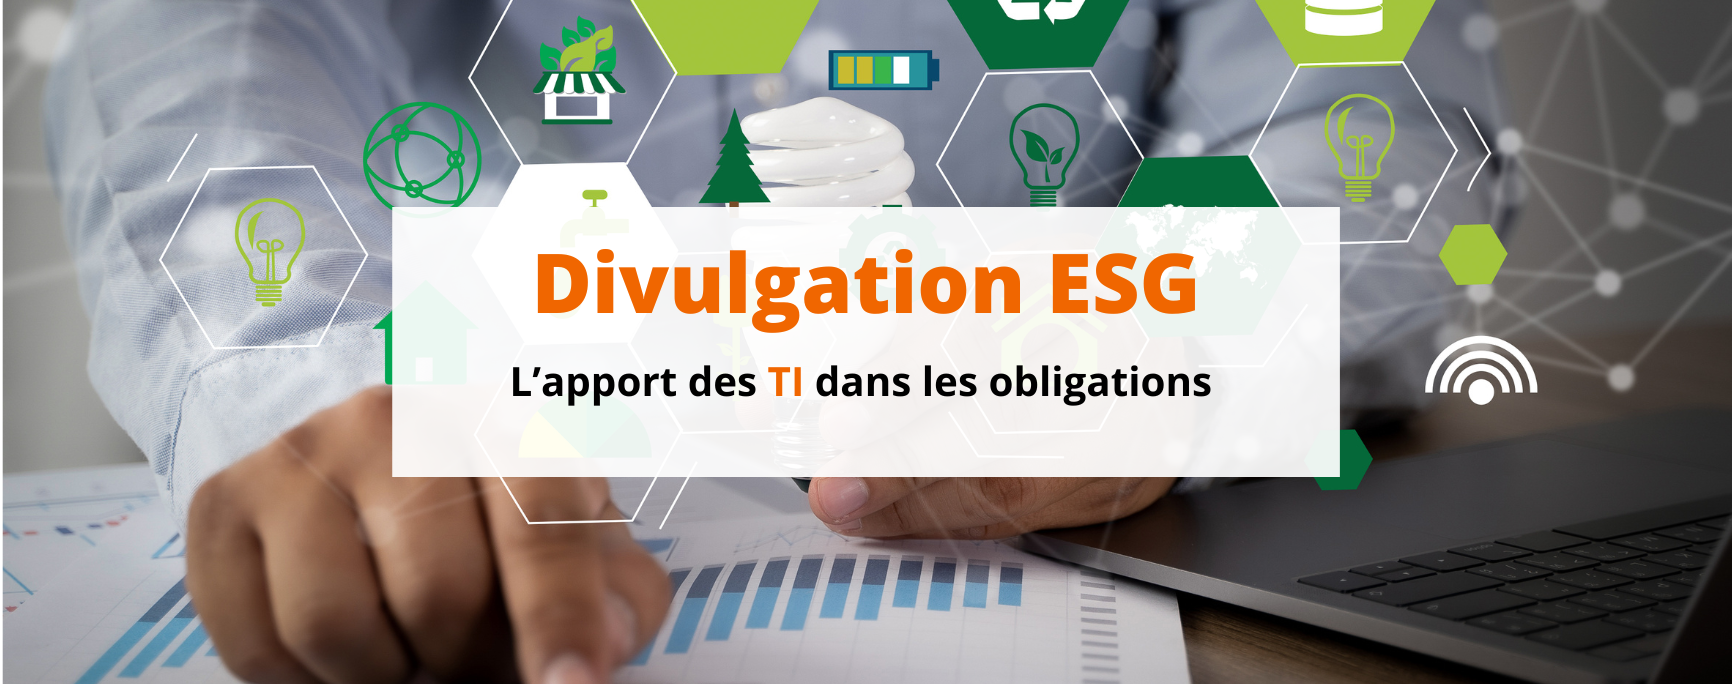 Divulgation ESG